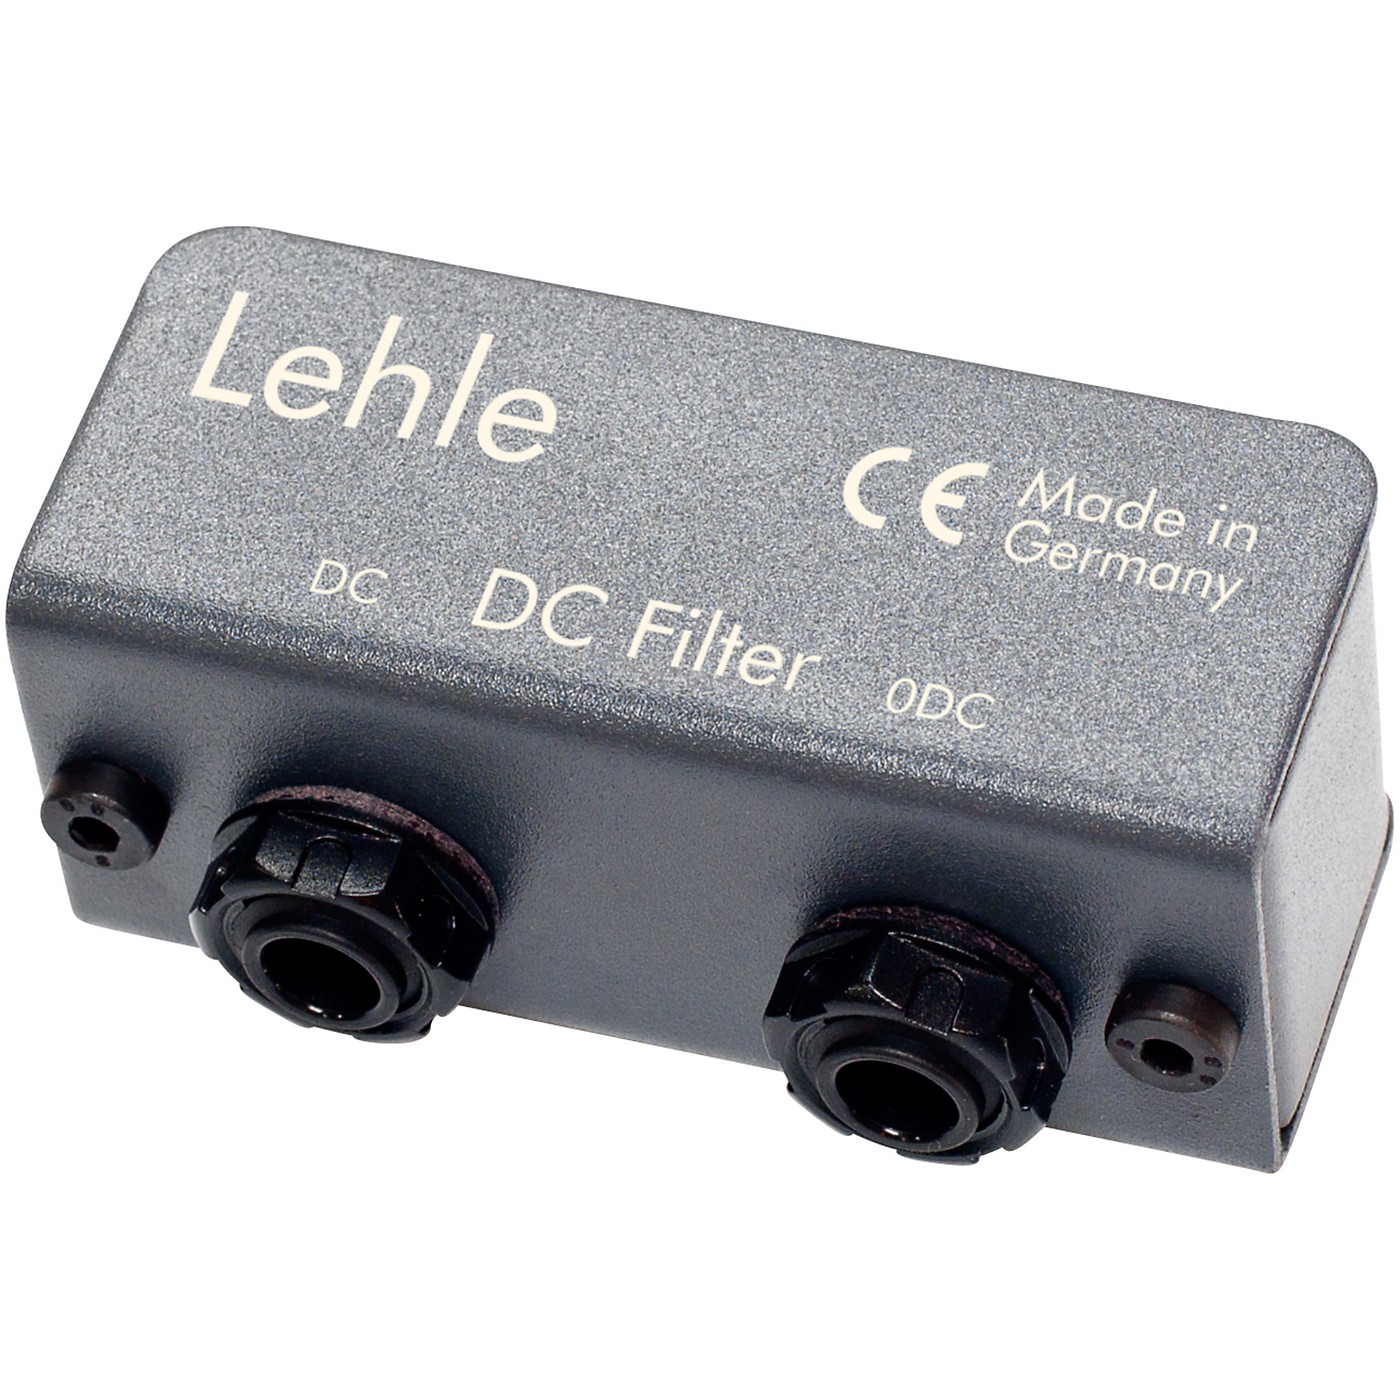 Lehle DC Filter thumbnail